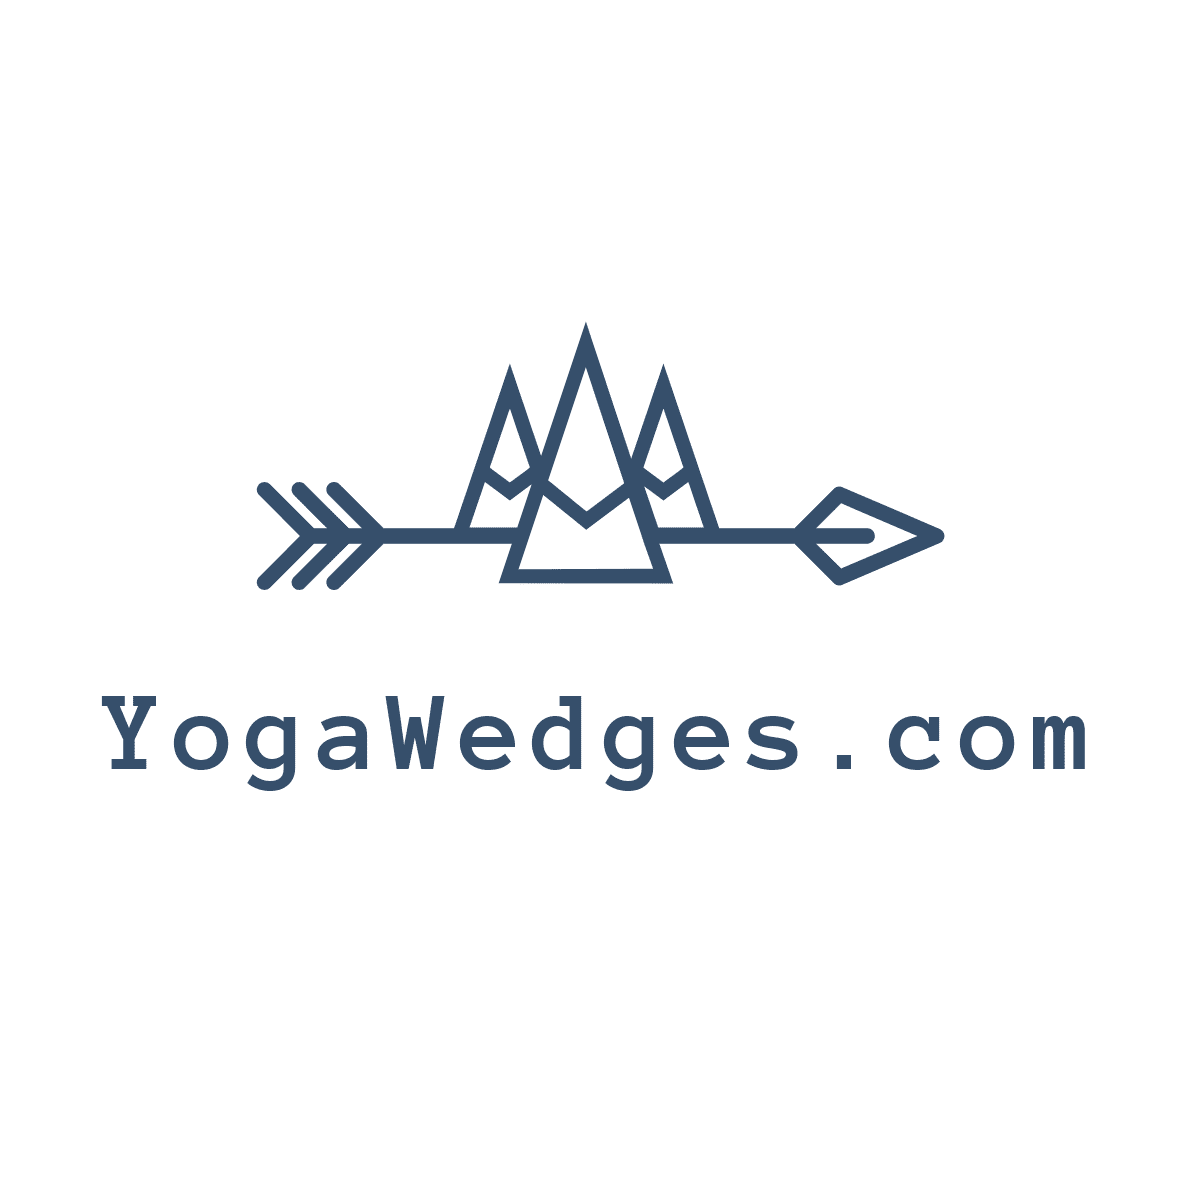 YogaWedges.com